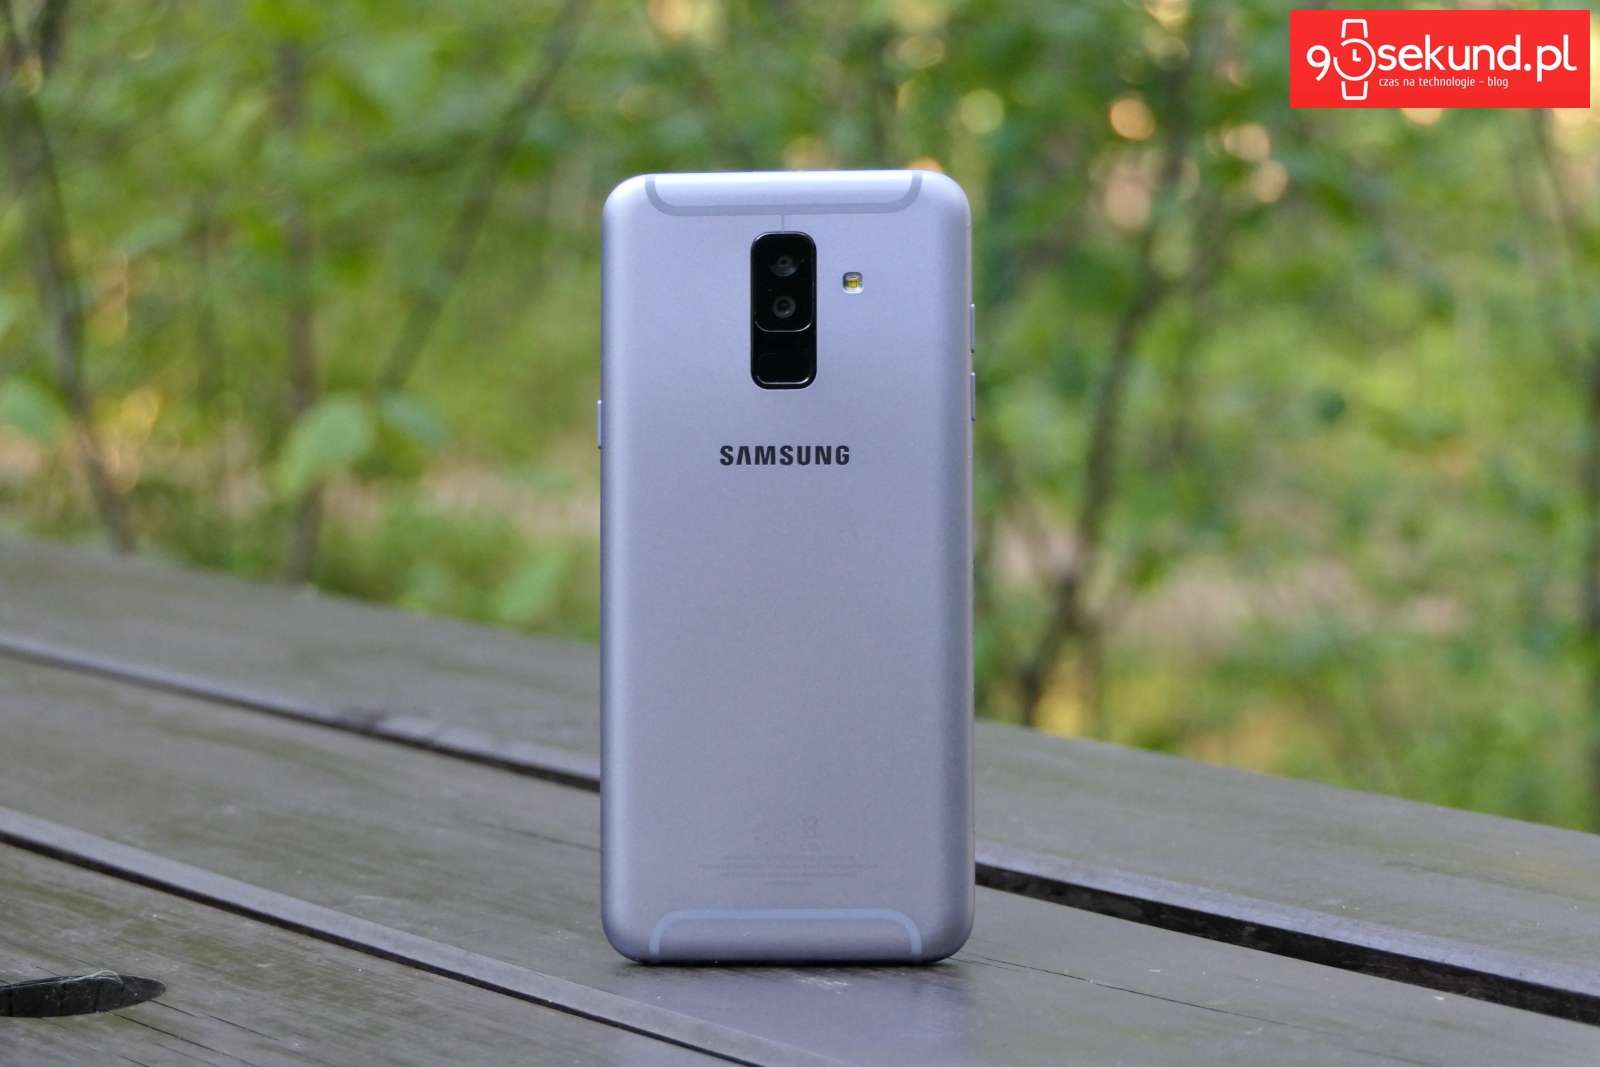 Recenzja Samsung Galaxy A6+ - 90sekund.pl - Michał Brożyński